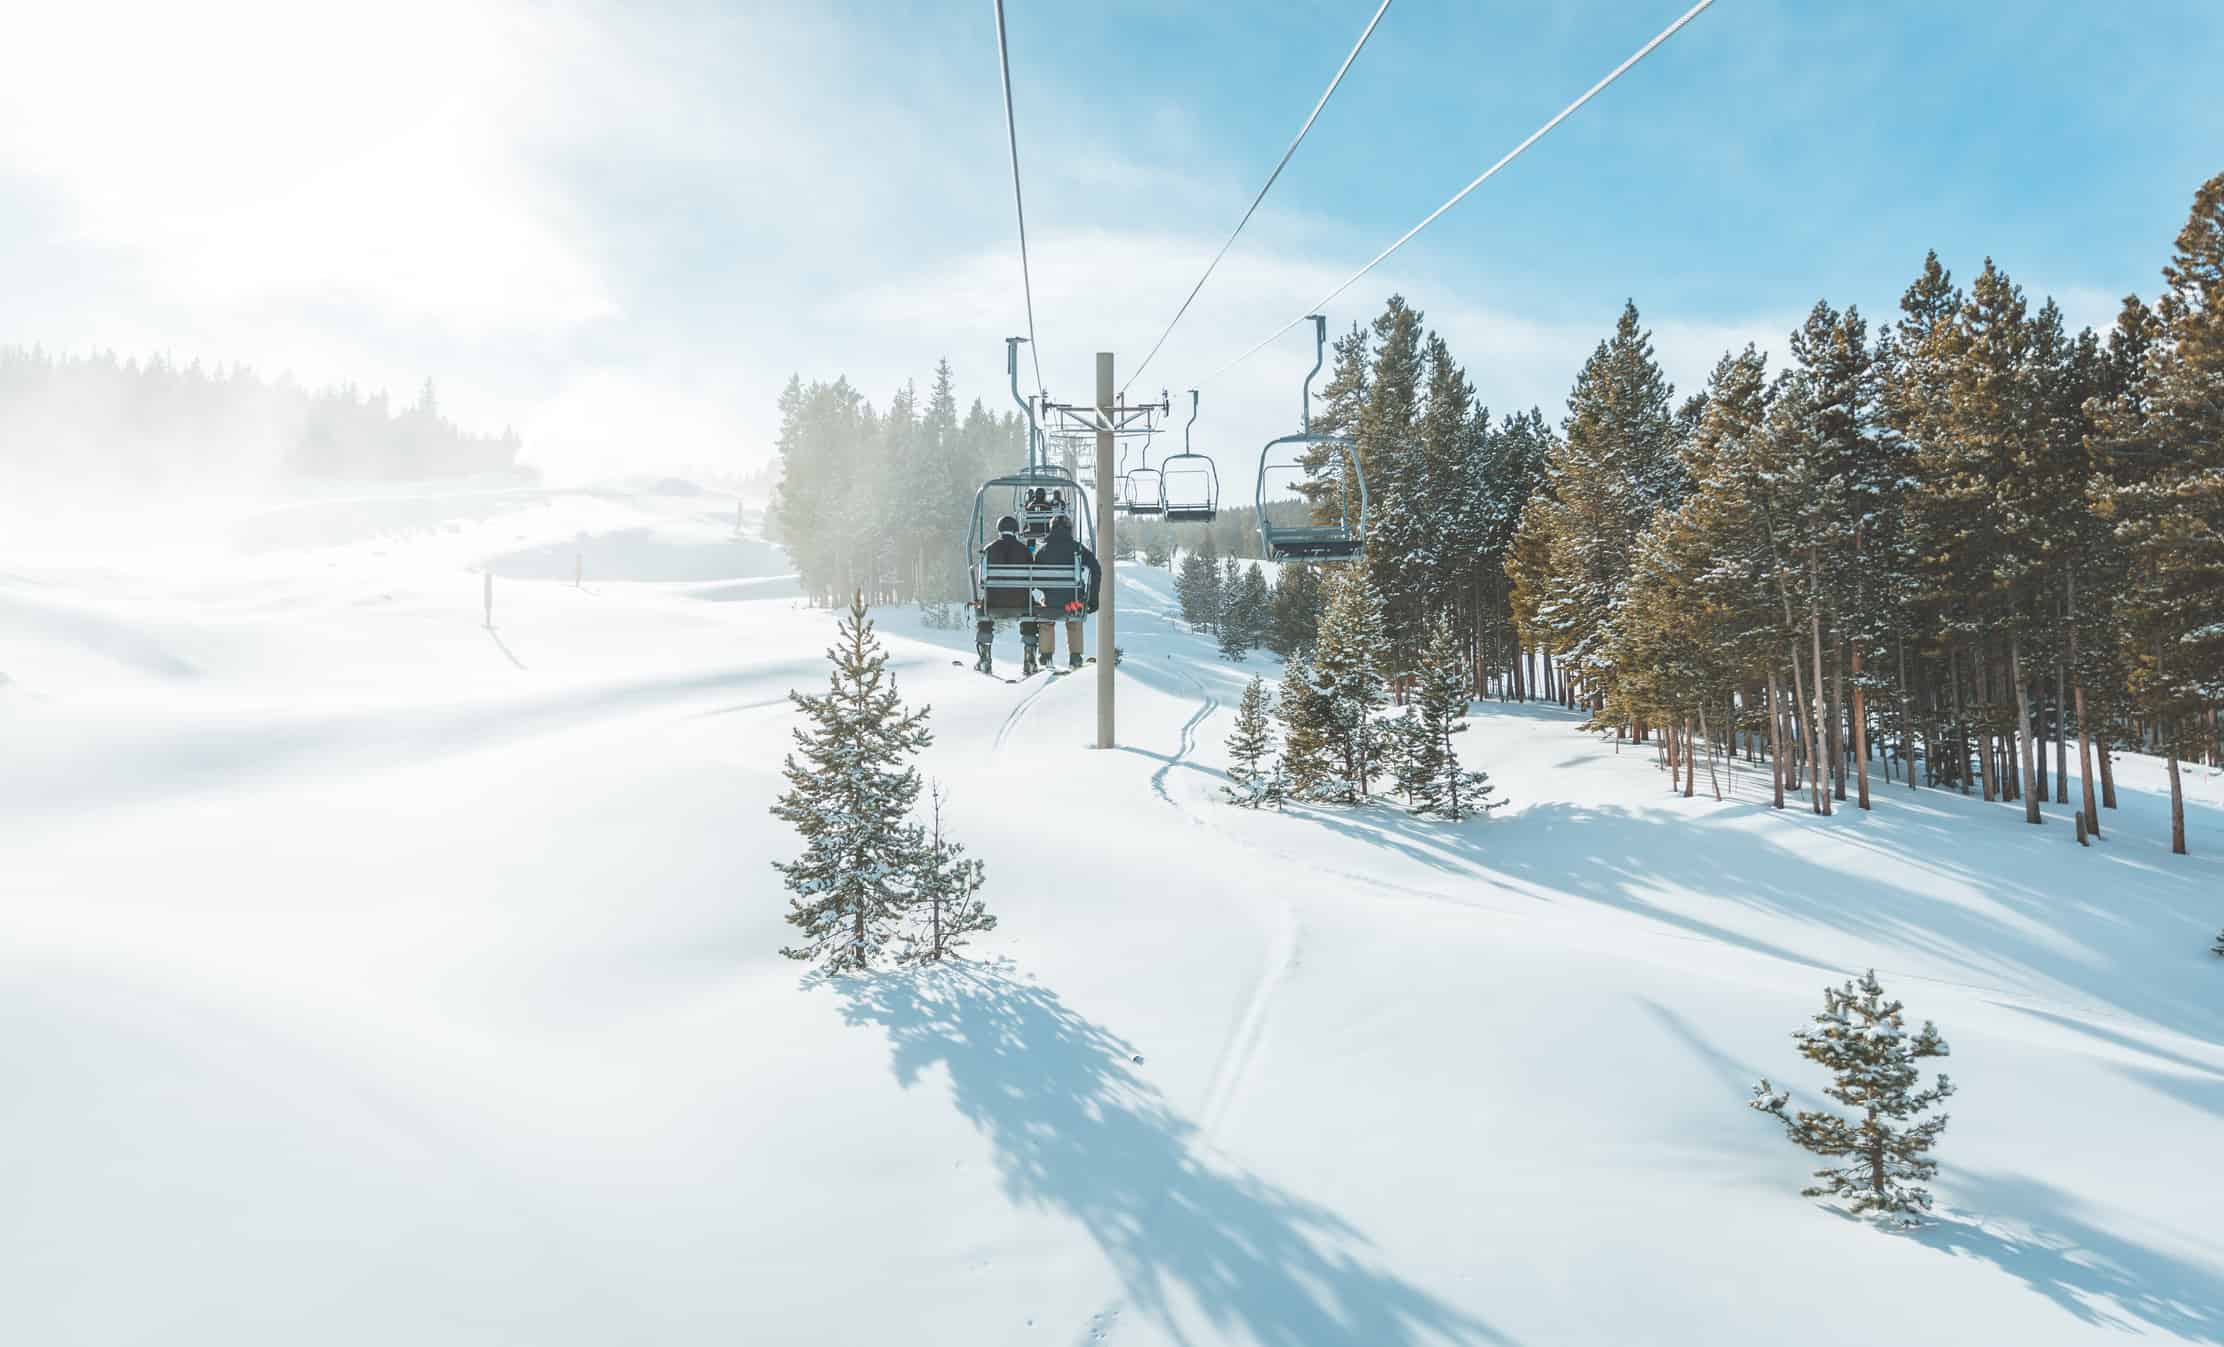 Breckenridge Ski Resort chair lift is the tallest in US